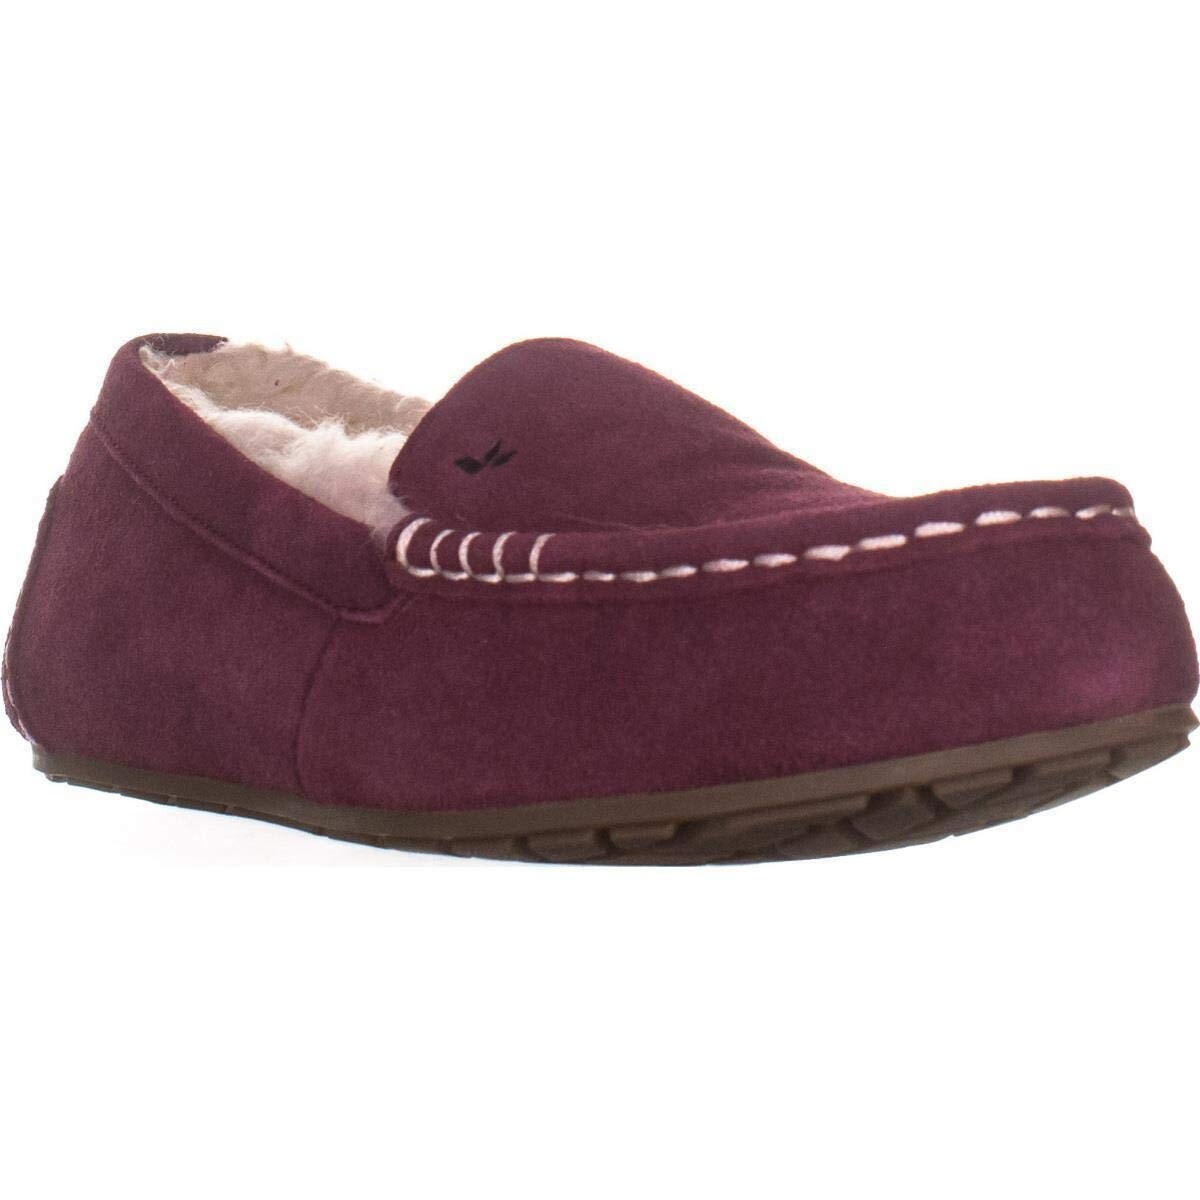 koolaburra by ugg lezly women's slippers